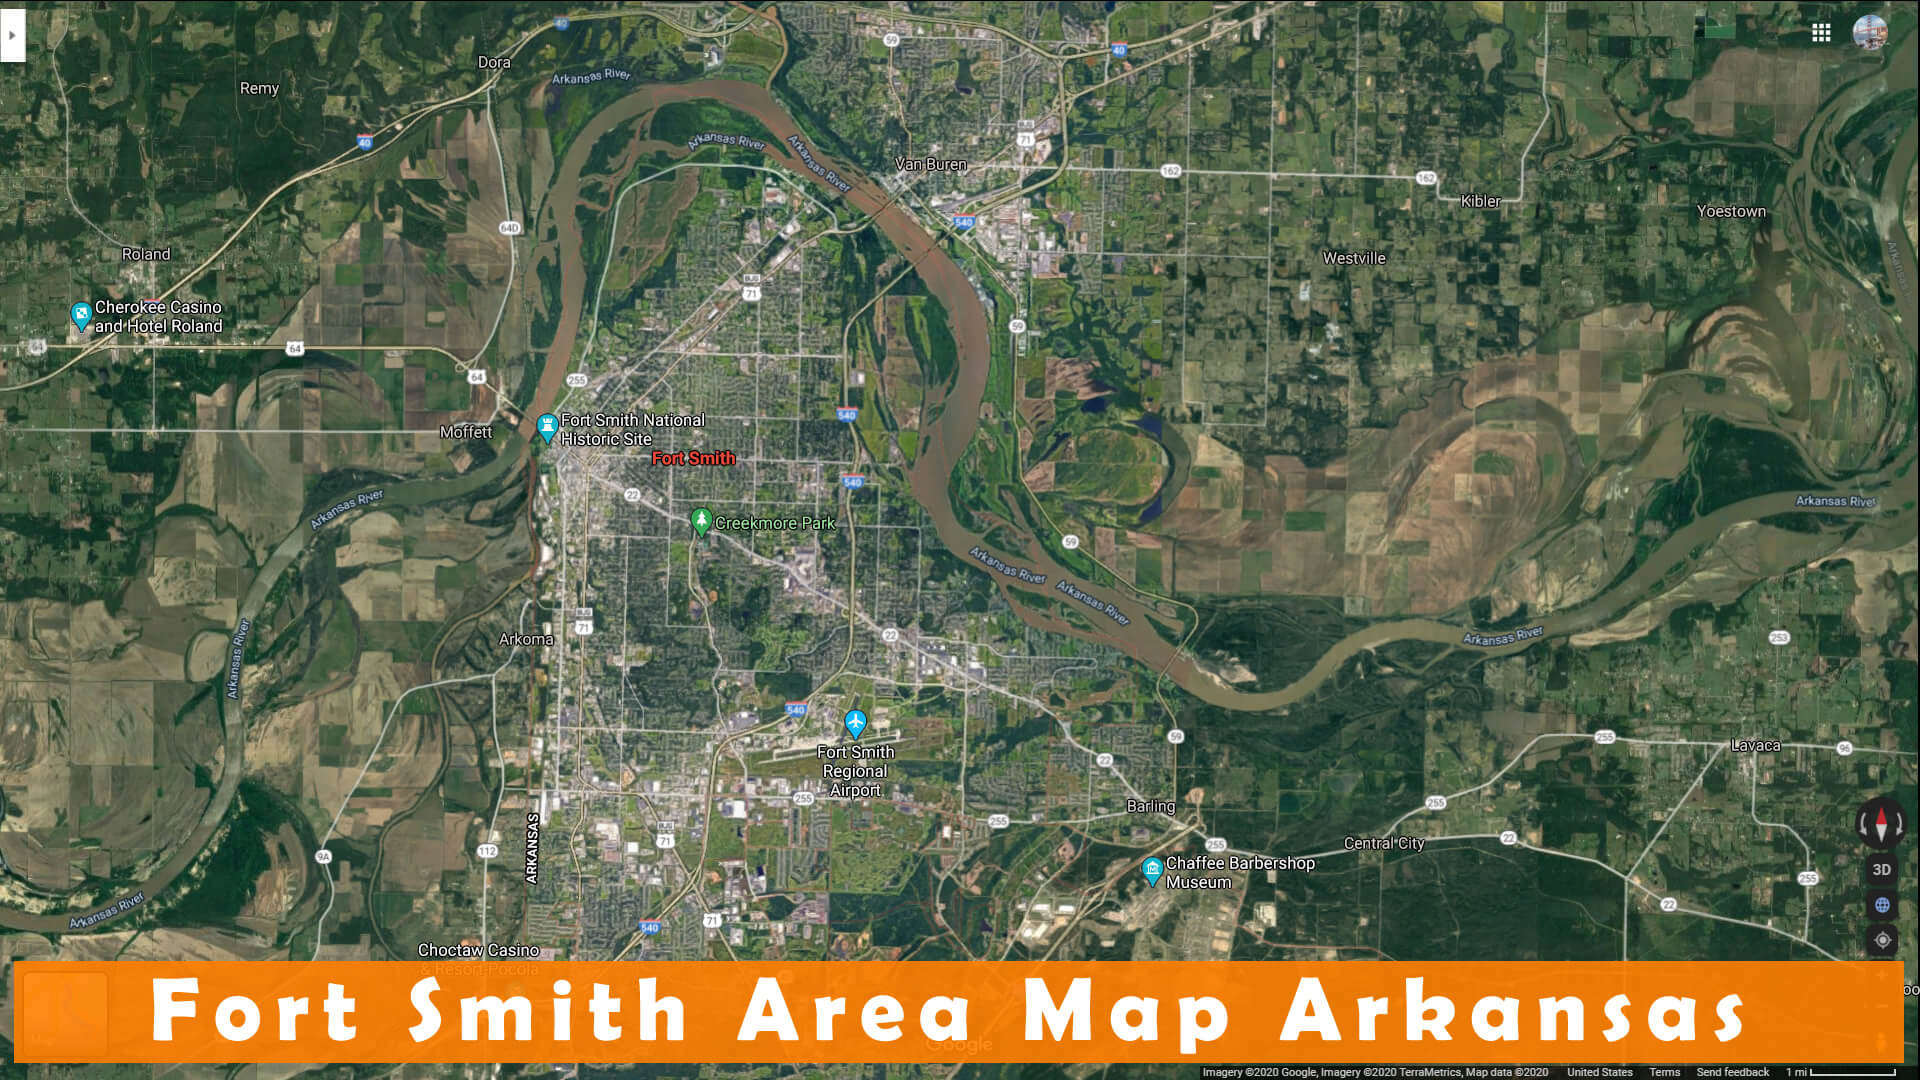 Fort Smith Area Map Arkansas